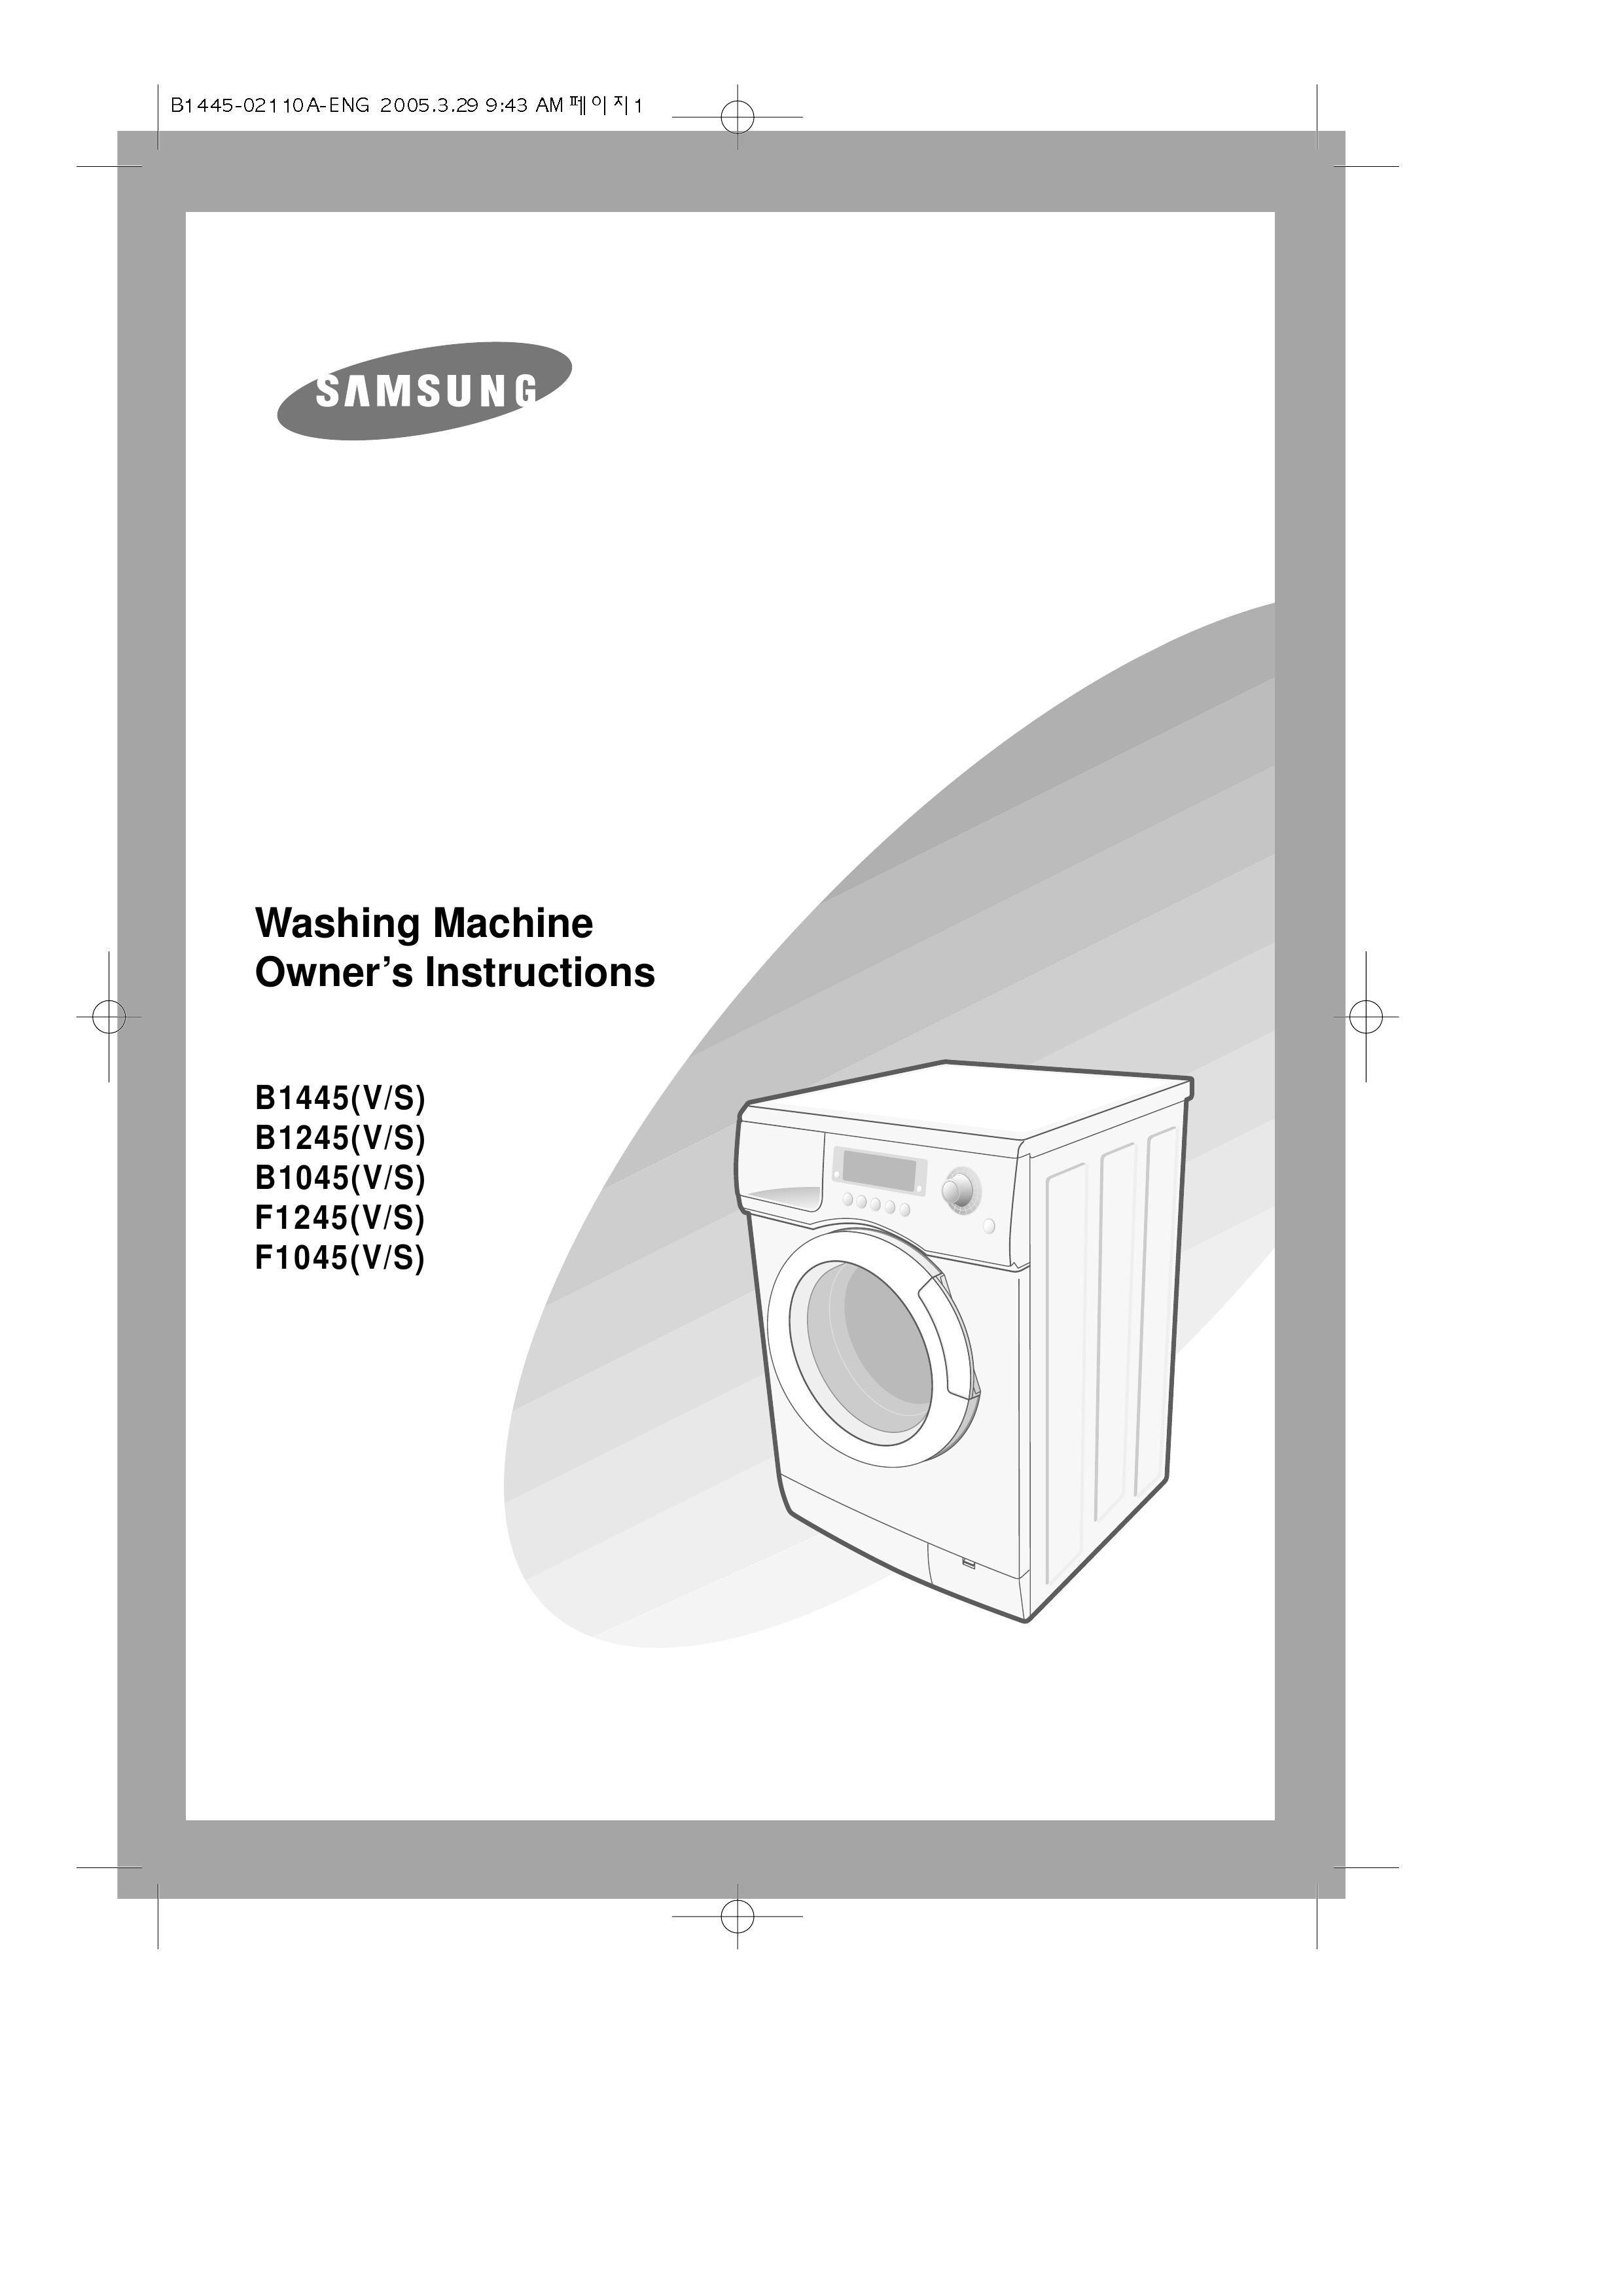 Samsung F1045(V/S) Washer User Manual